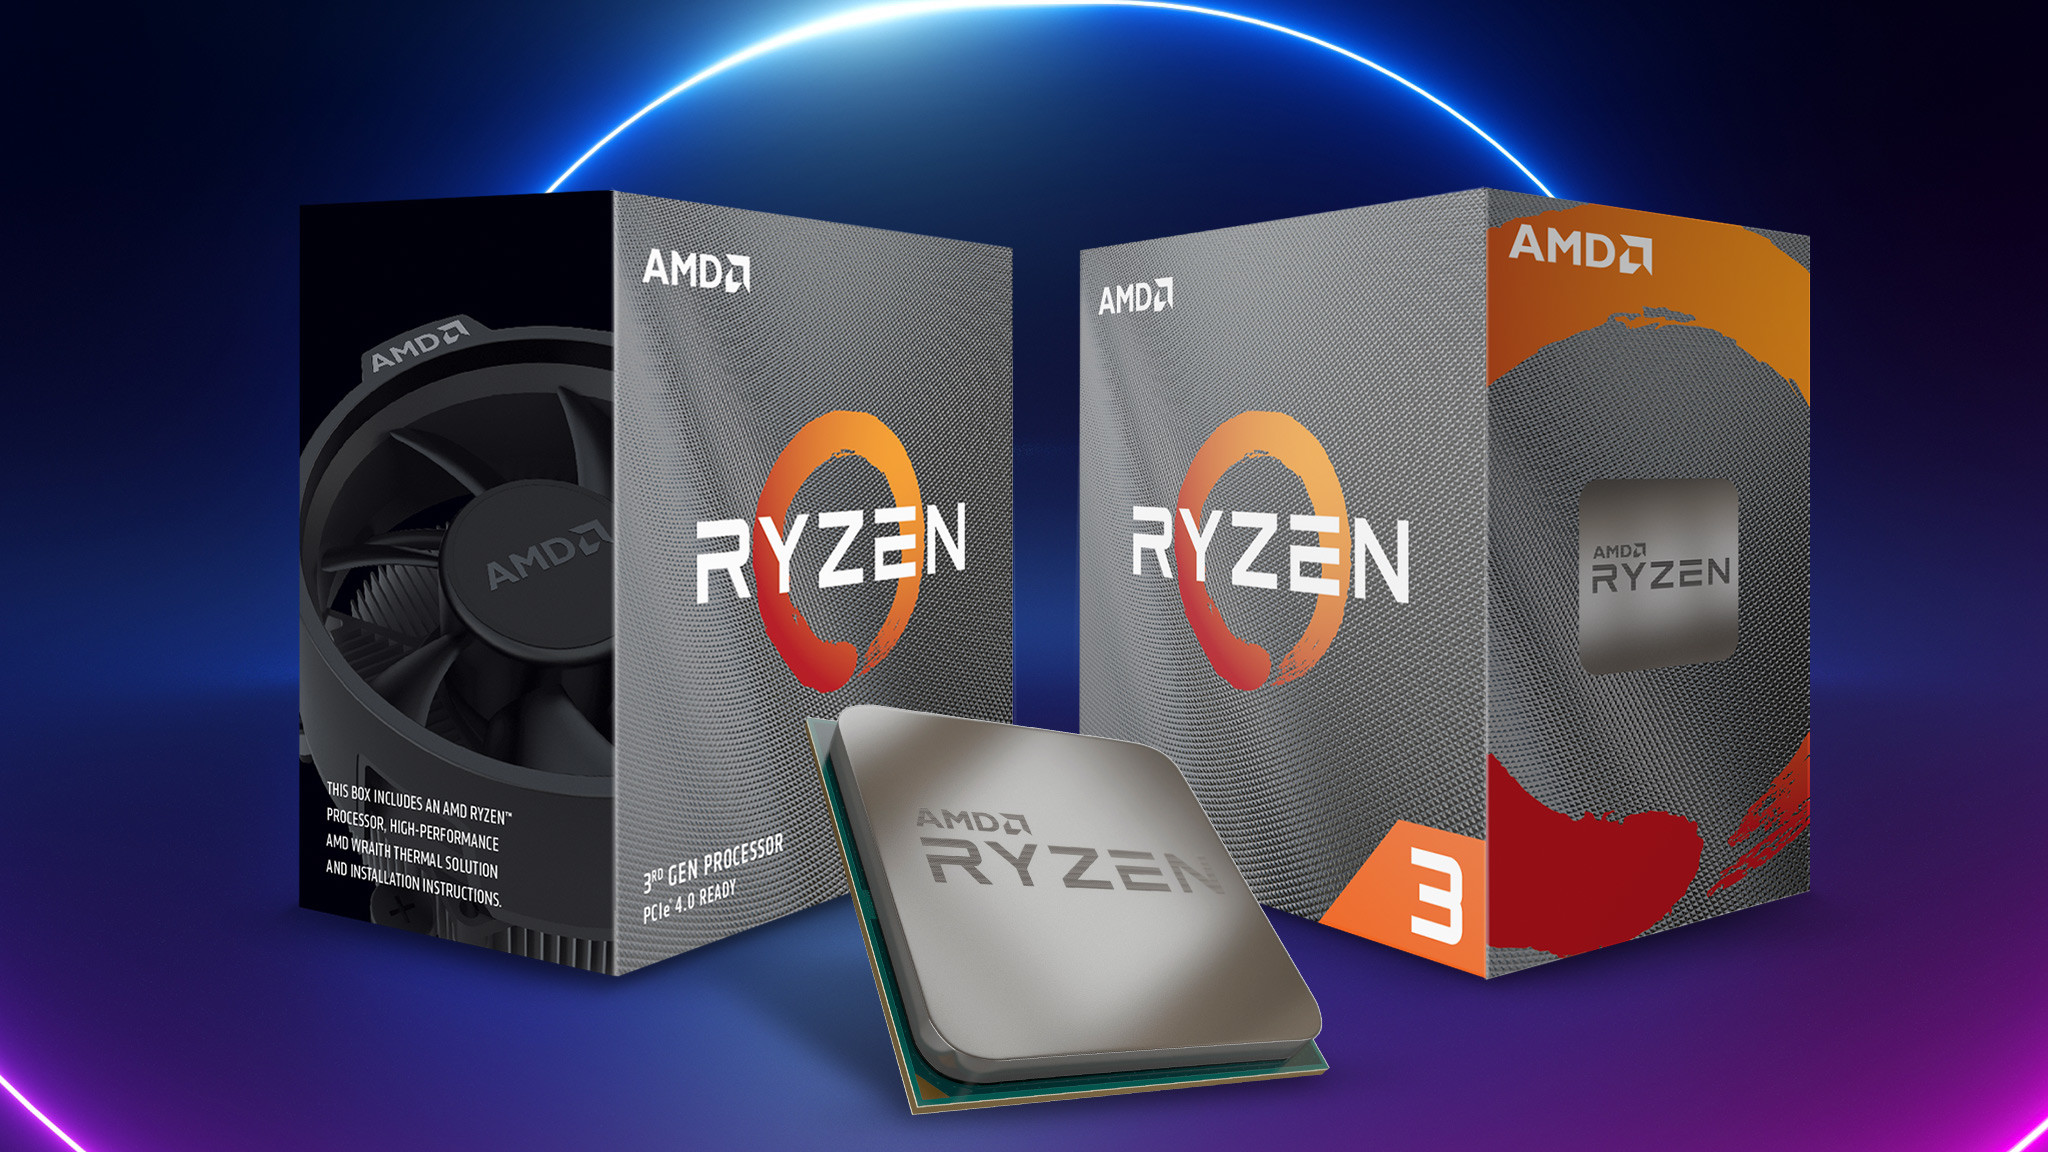 AMD Ryzen 3 3300X: מעבד משחקים משתלם בישראל